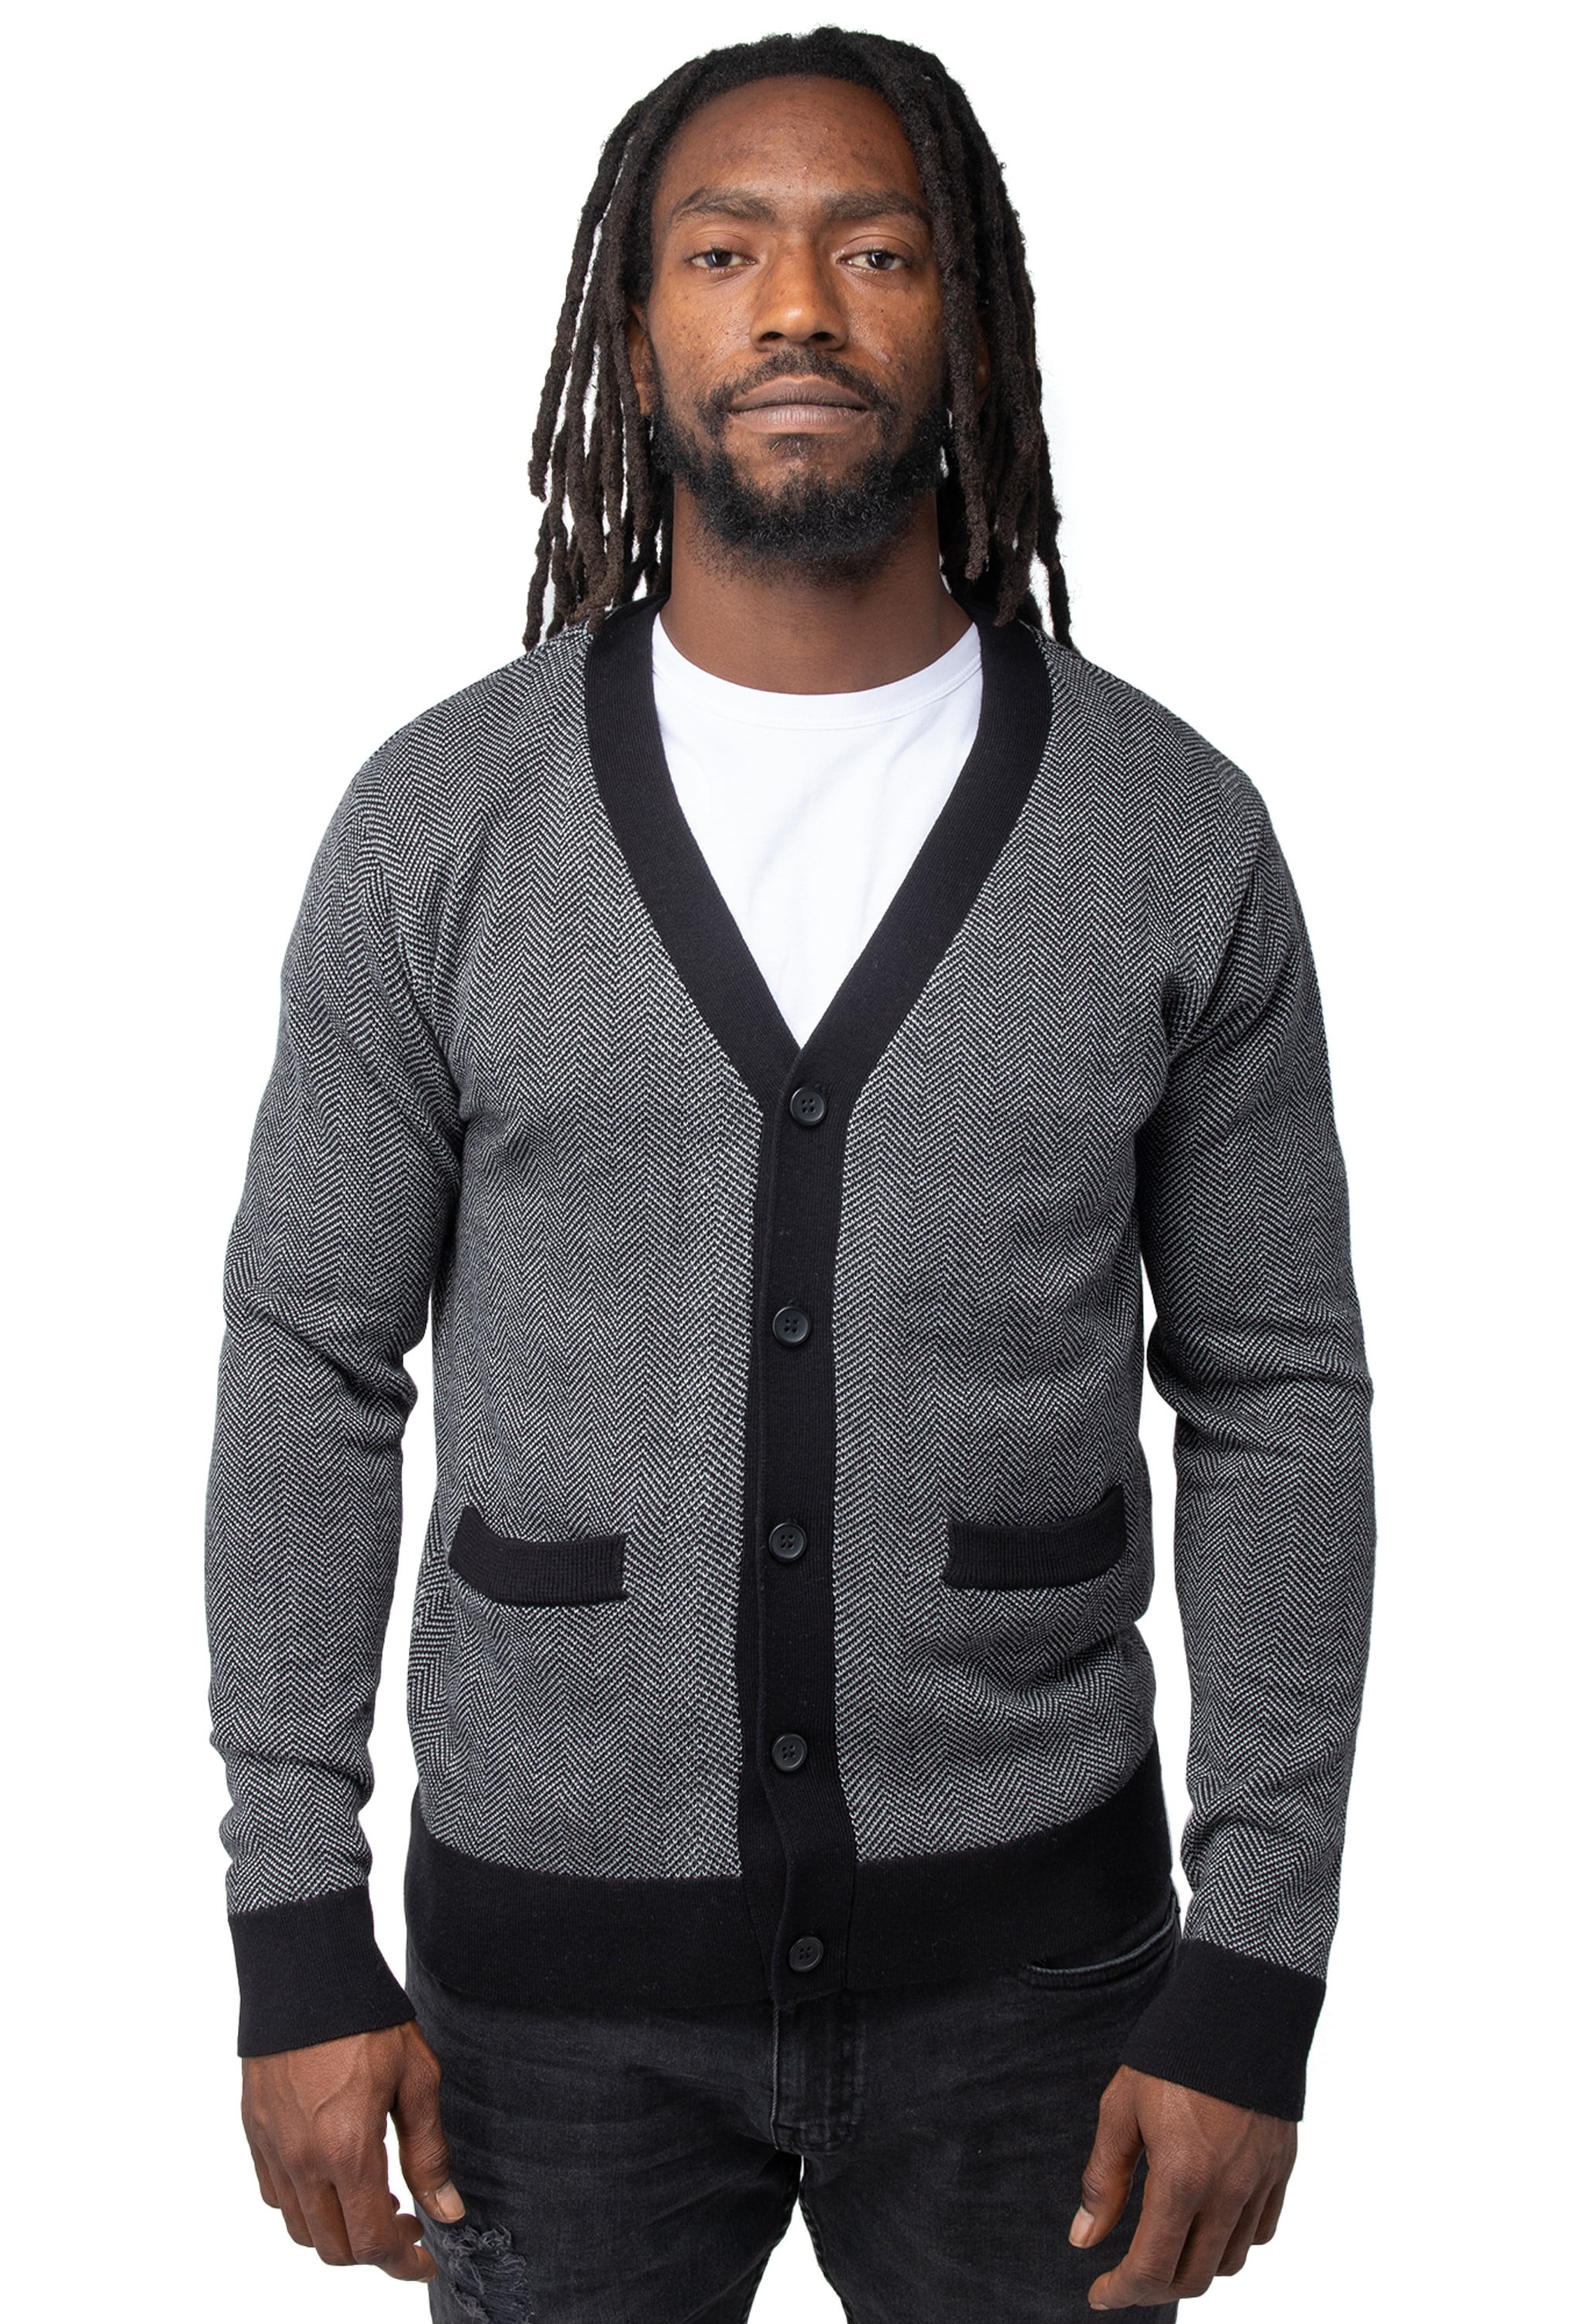 kapok Turist komponent Men's Herringbone Long Sleeve Cardigan - Classic Fit Casual Fashion Sweater  Off White-Black - Walmart.com